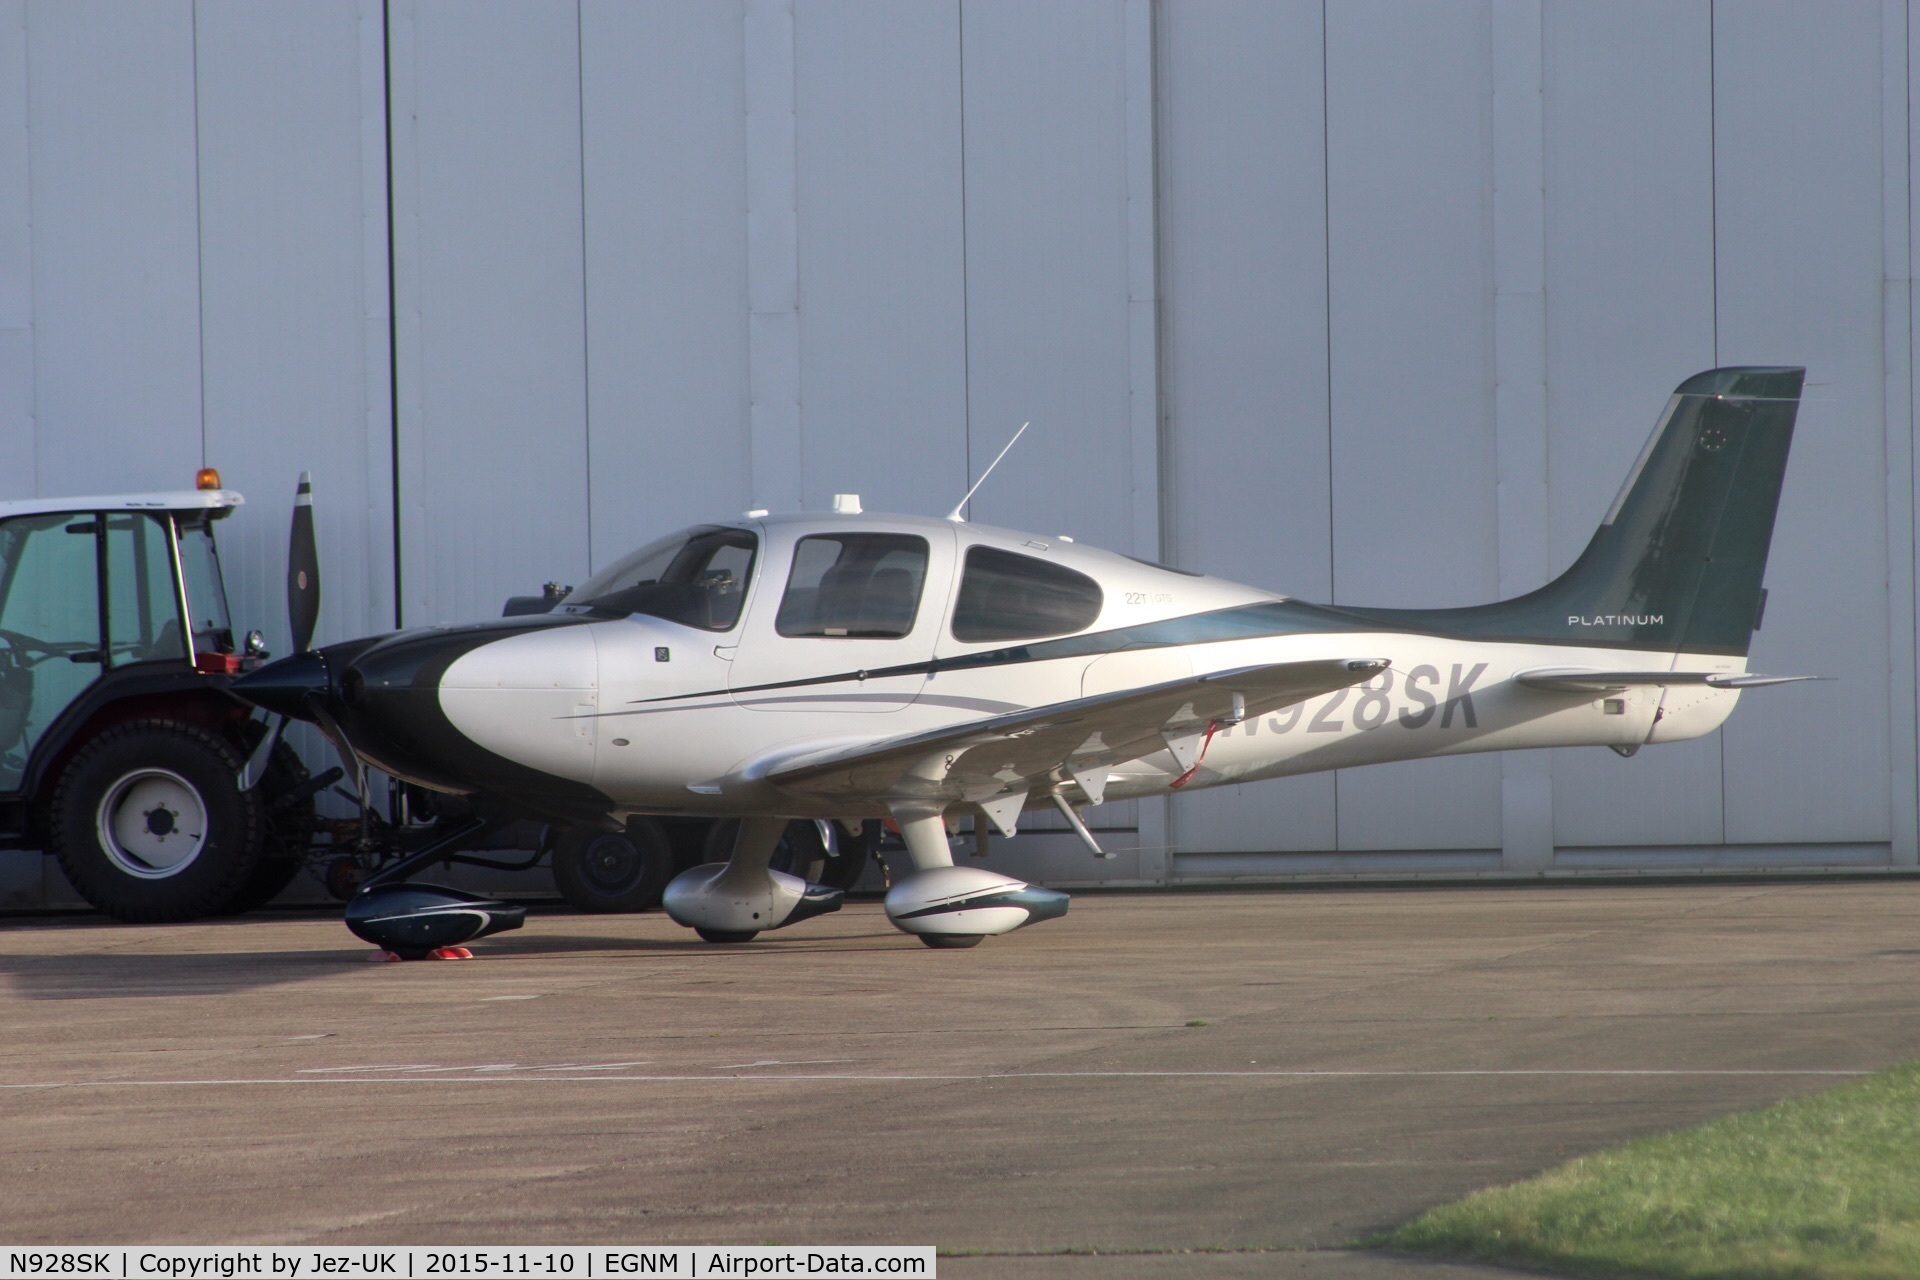 N928SK, 2014 Cirrus SR22T C/N 0928, outside Multiflight hanger at general aviation side of LBA,